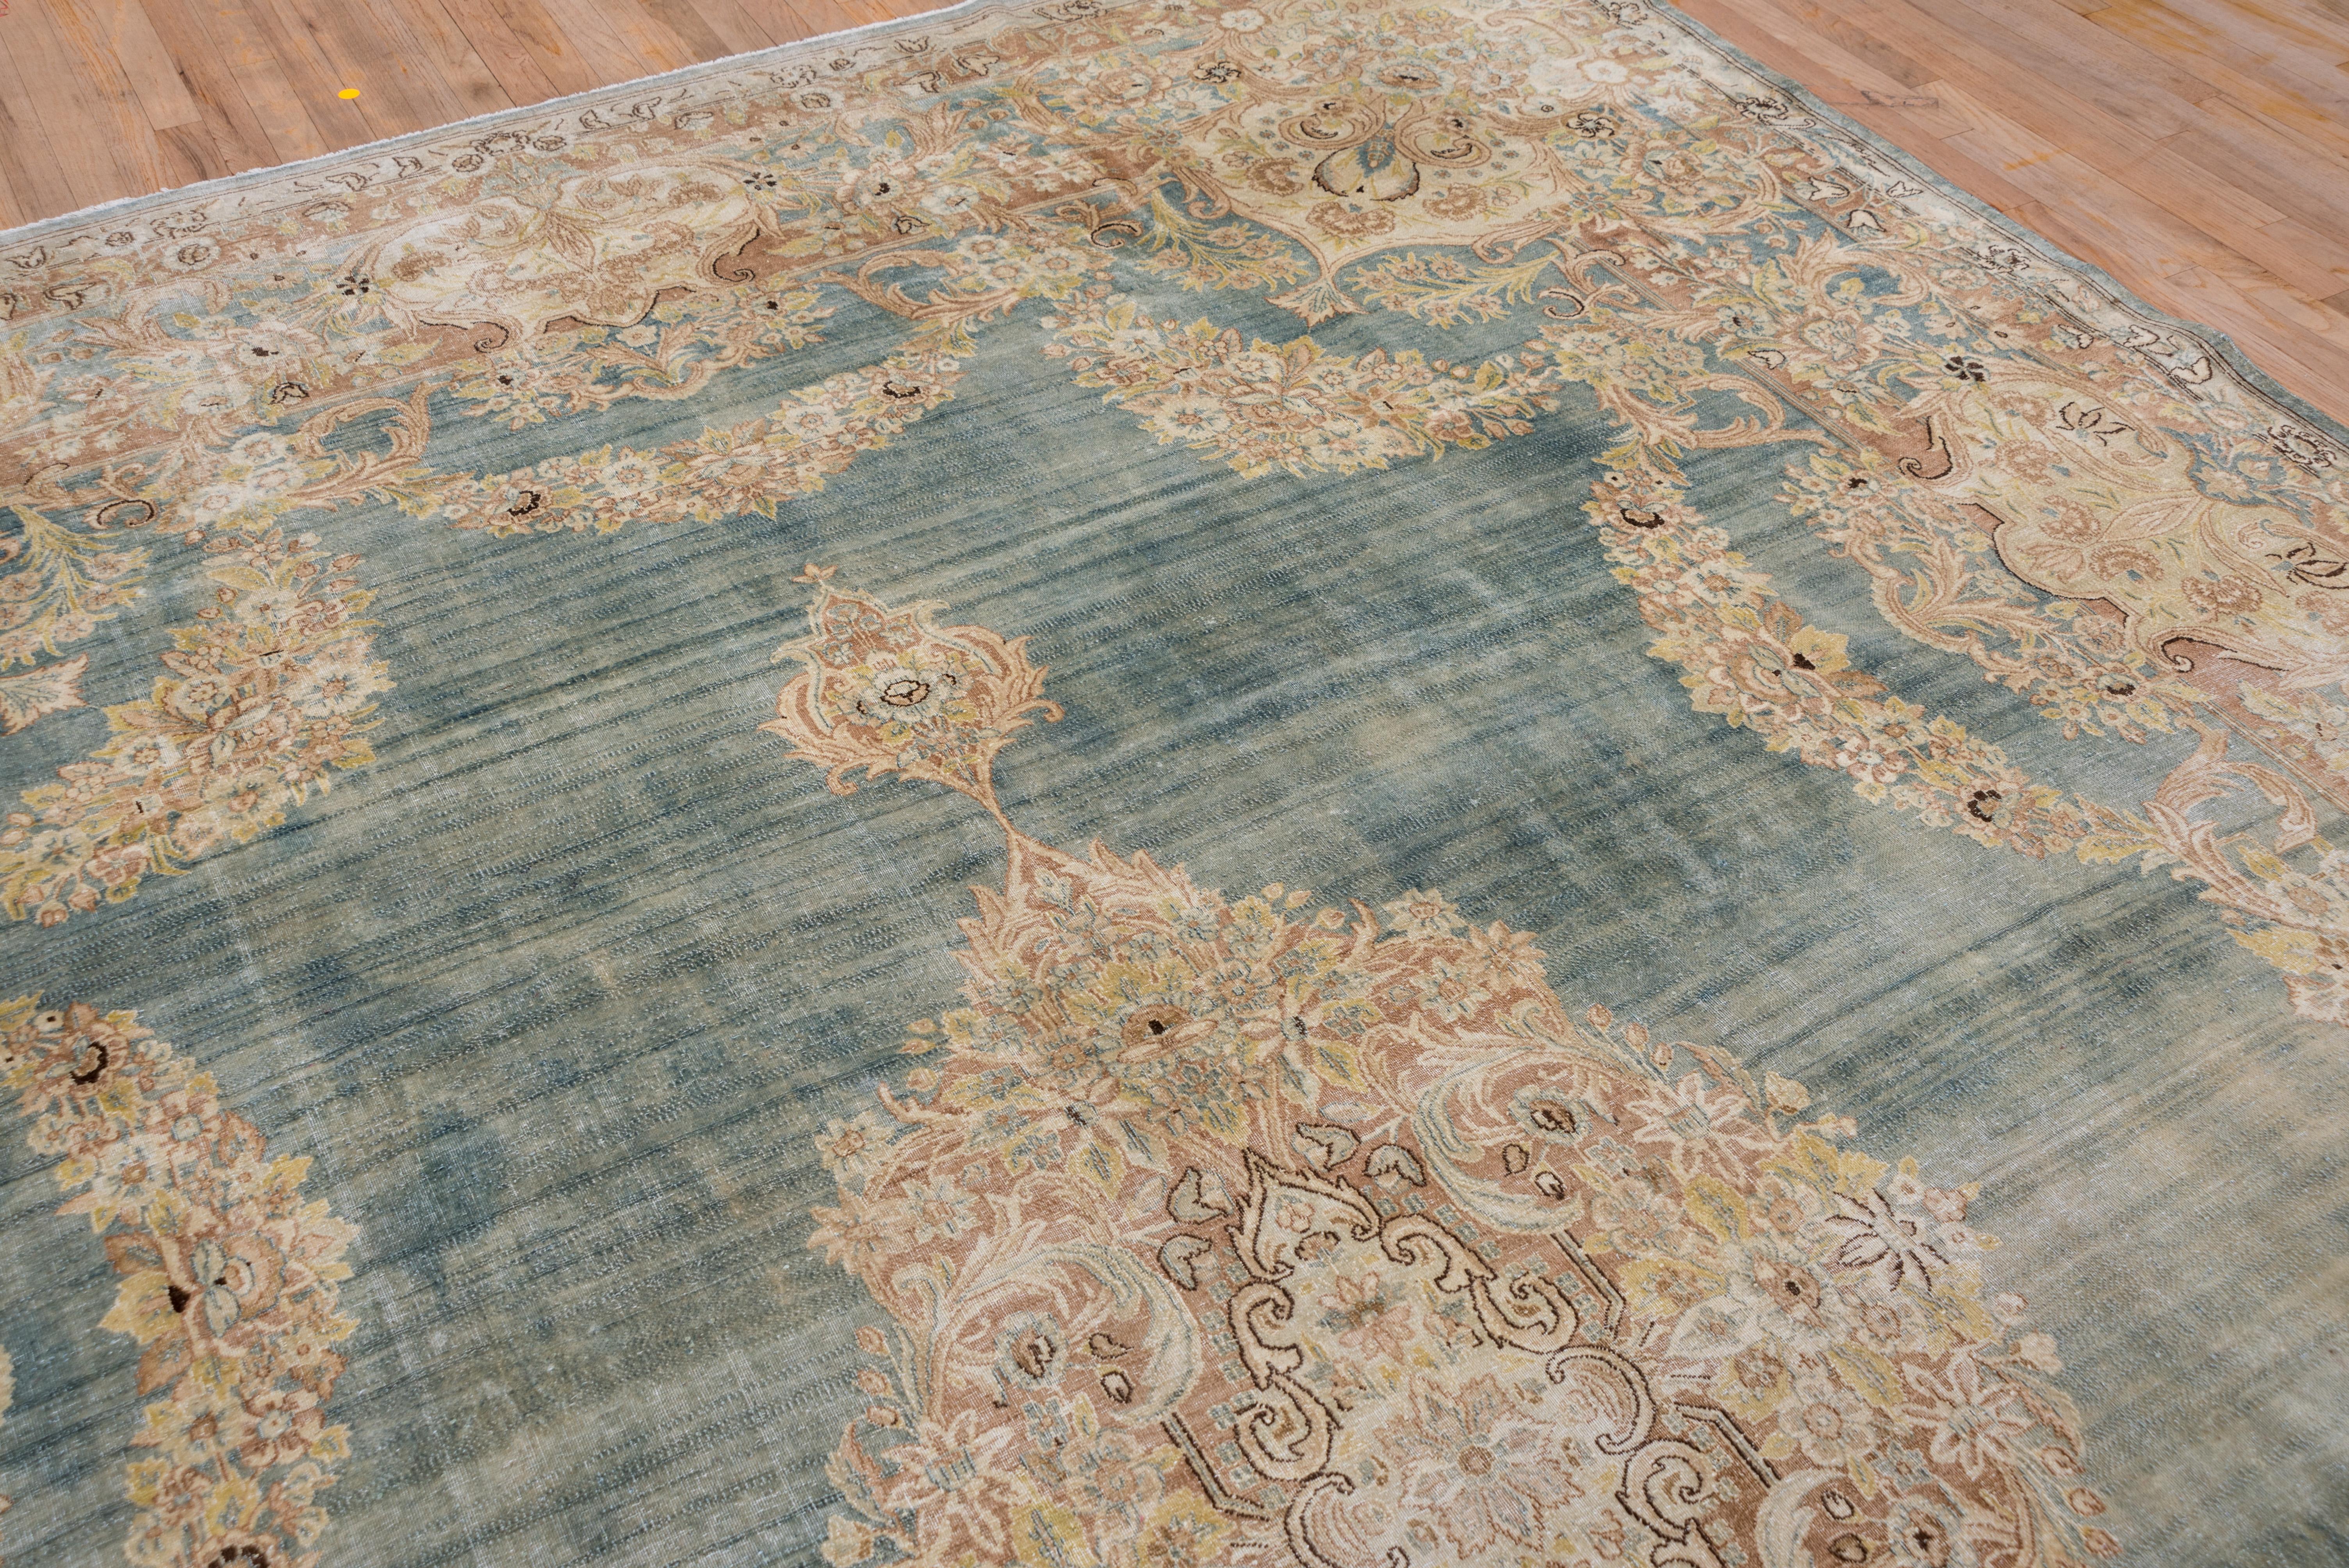 Antique Turkish Sivas Carpet, Blue Green Field, Formal Palette For Sale 3